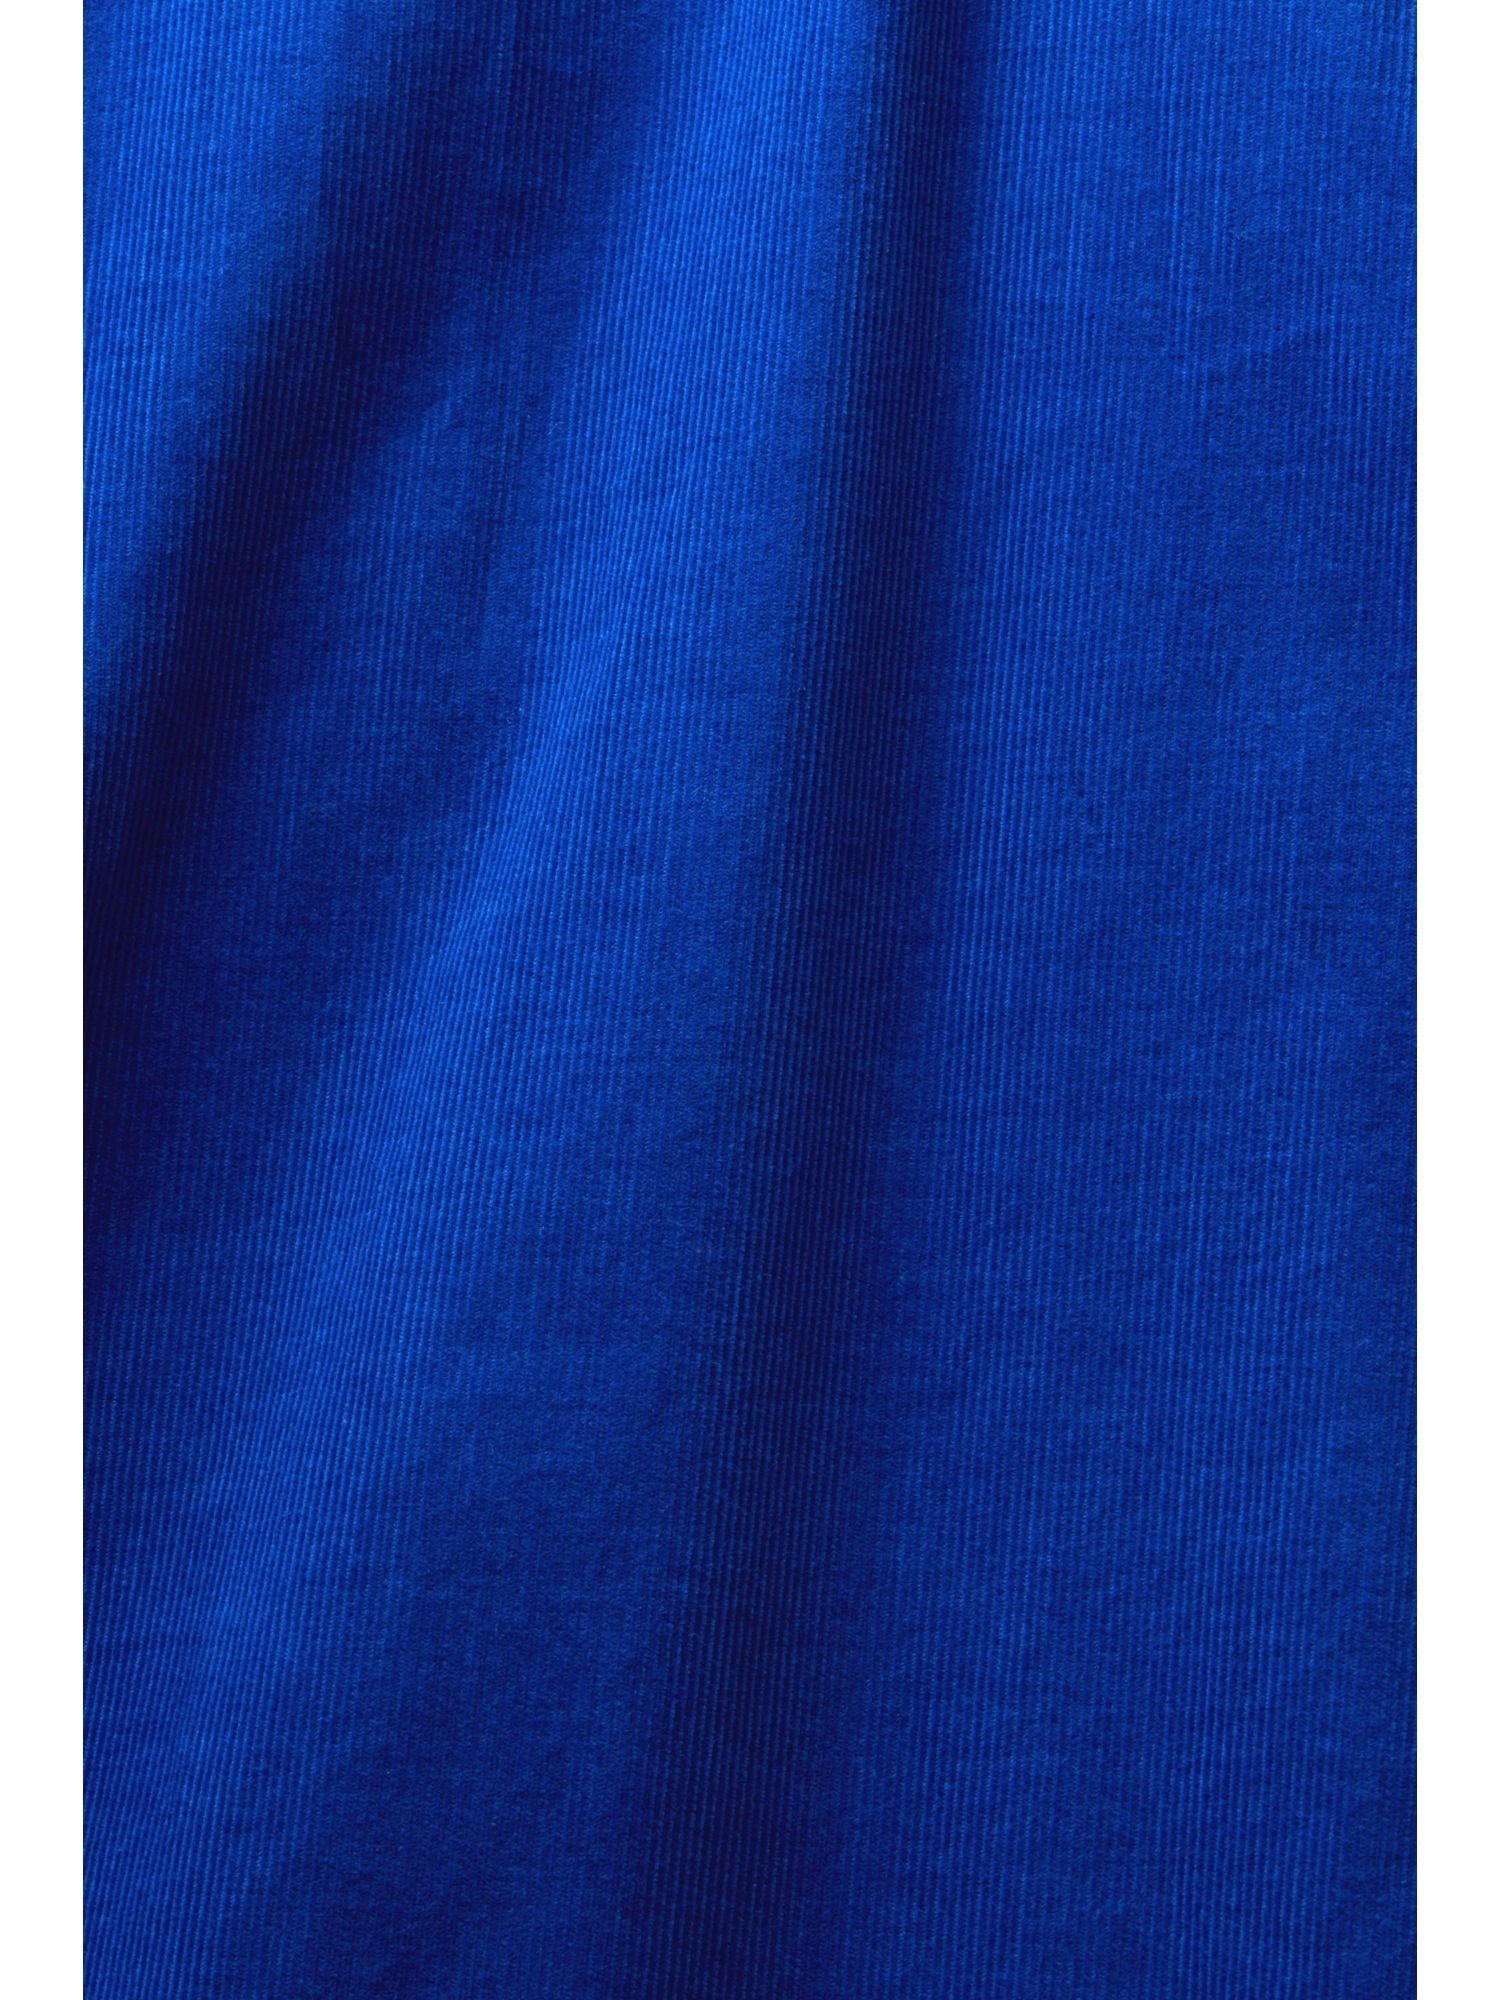 Baumwolle aus BRIGHT BLUE Cord, Langarmhemd Hemd 100% Esprit